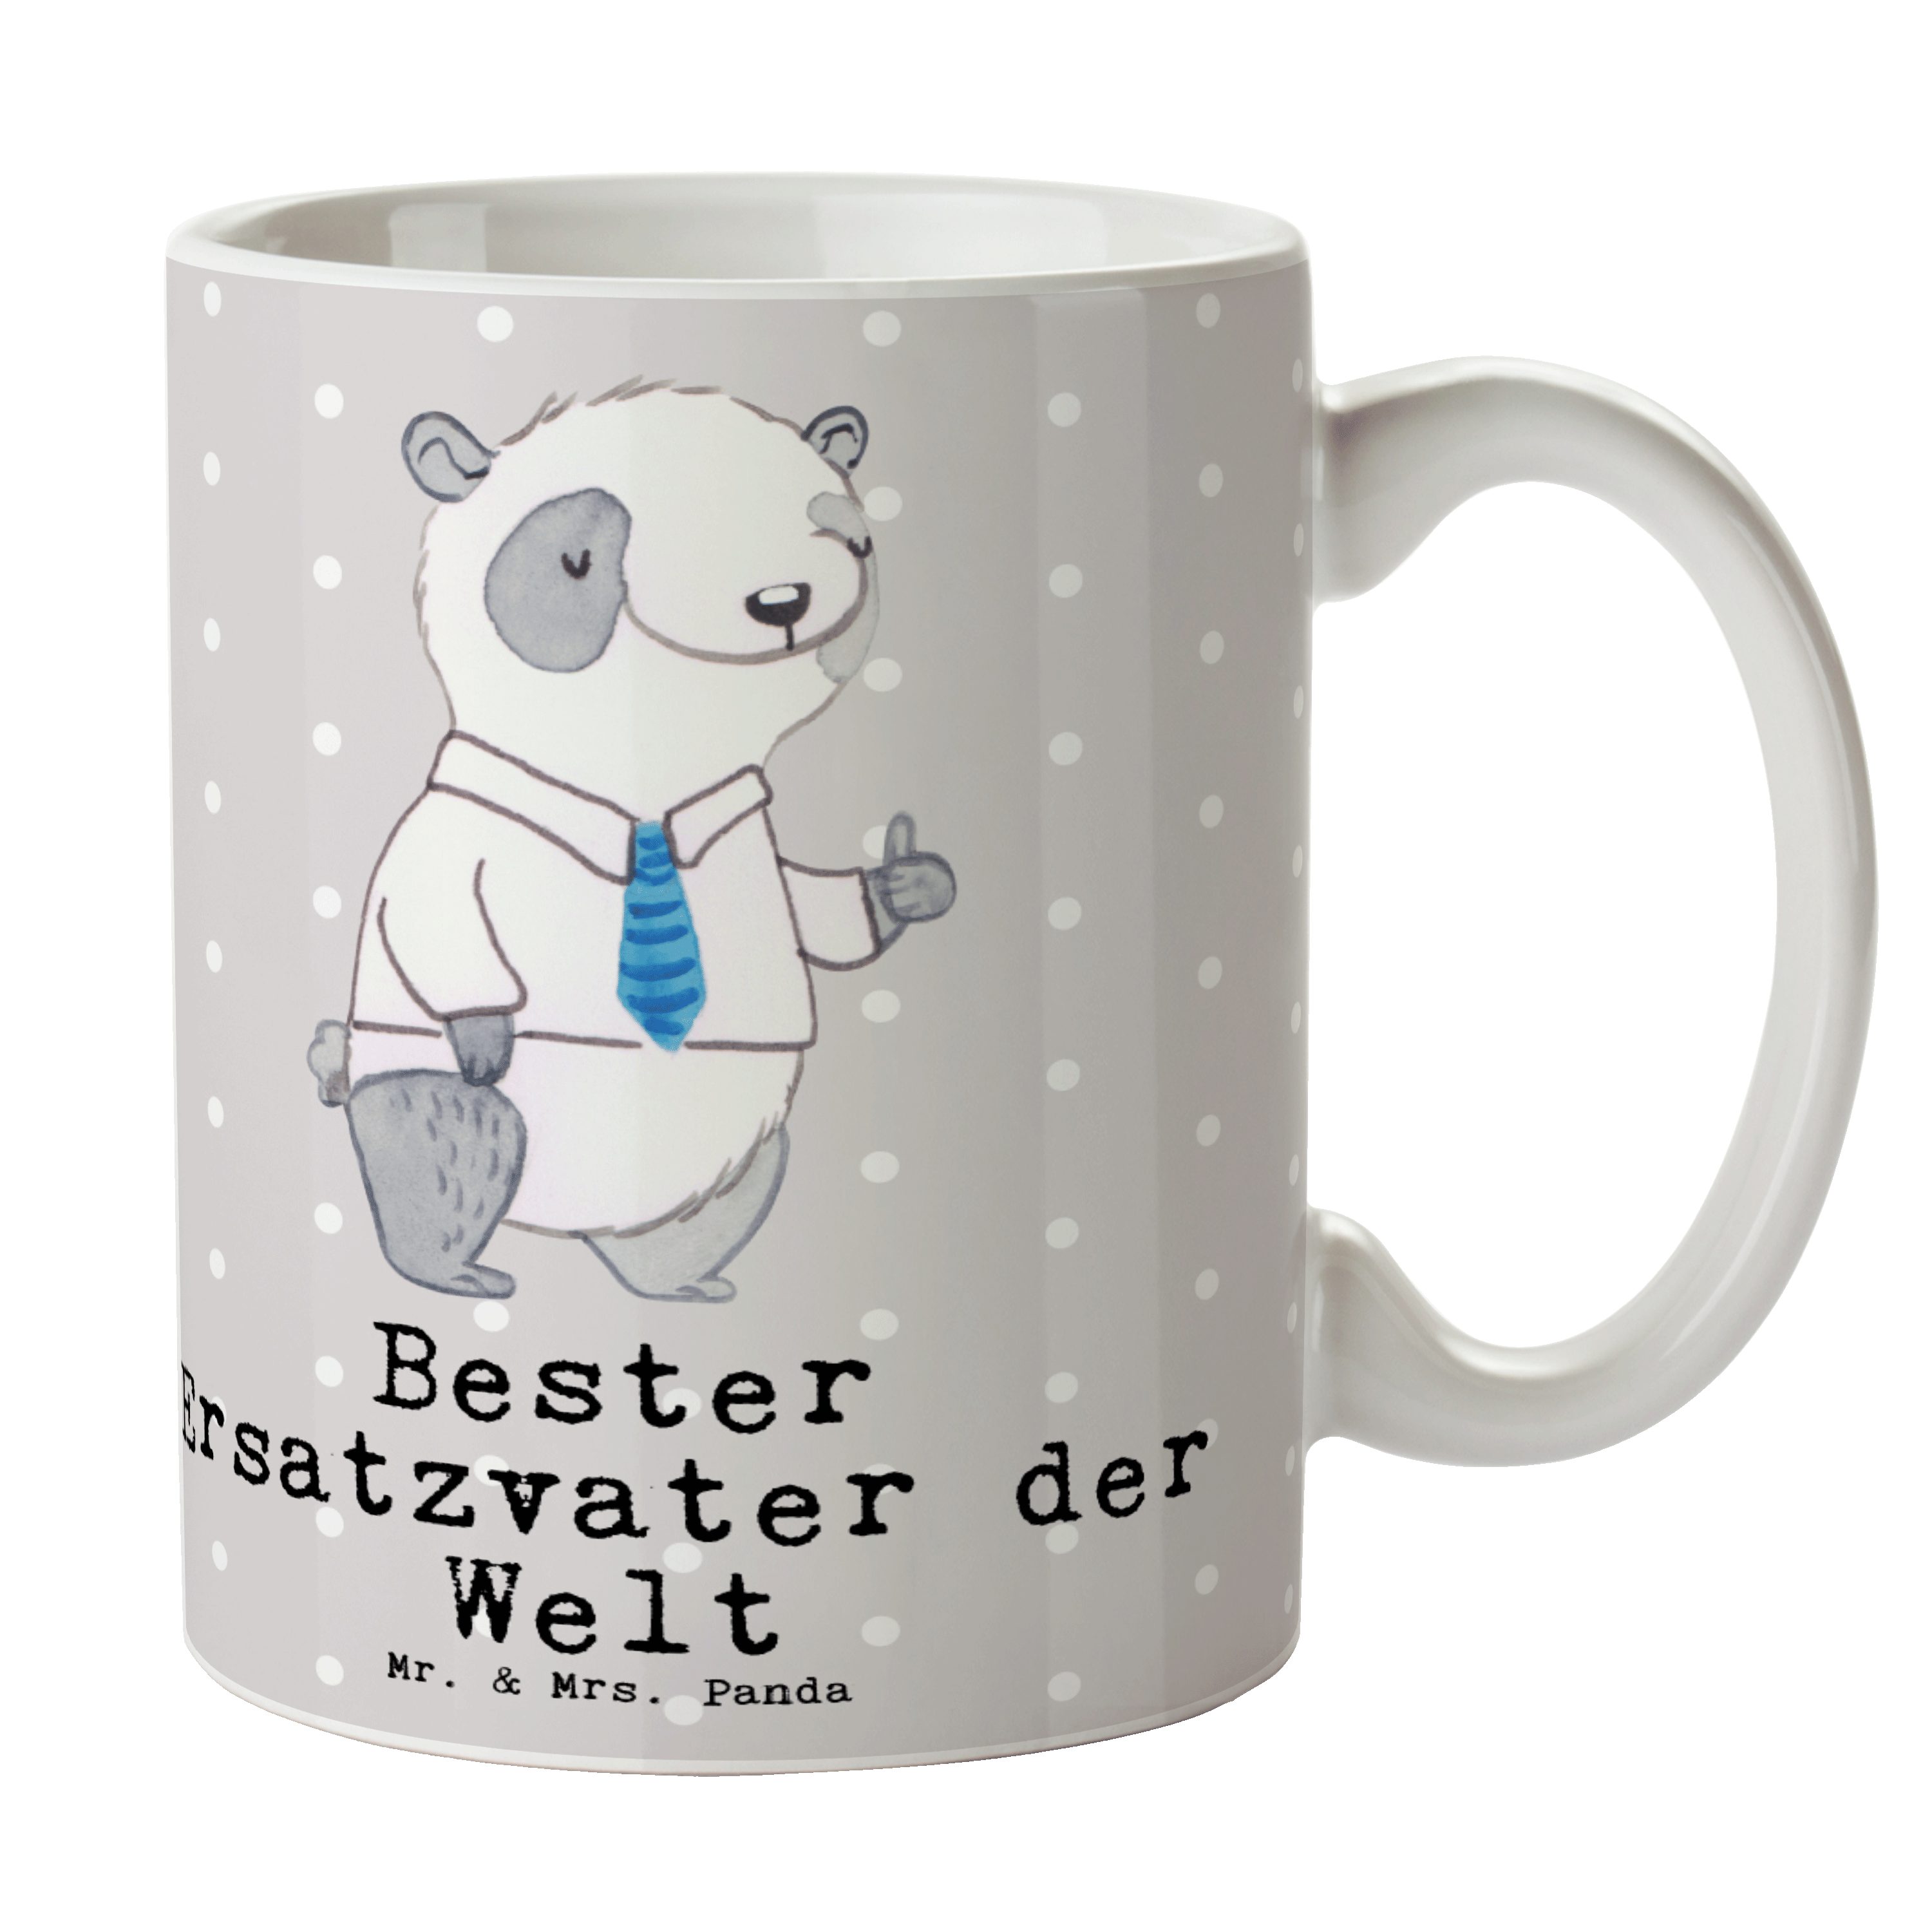 Panda Mr. Keramik Geschenk, Panda Tasse Grau Bedanken, Welt - der - Ersatzvater Pastell Bester & Mrs.